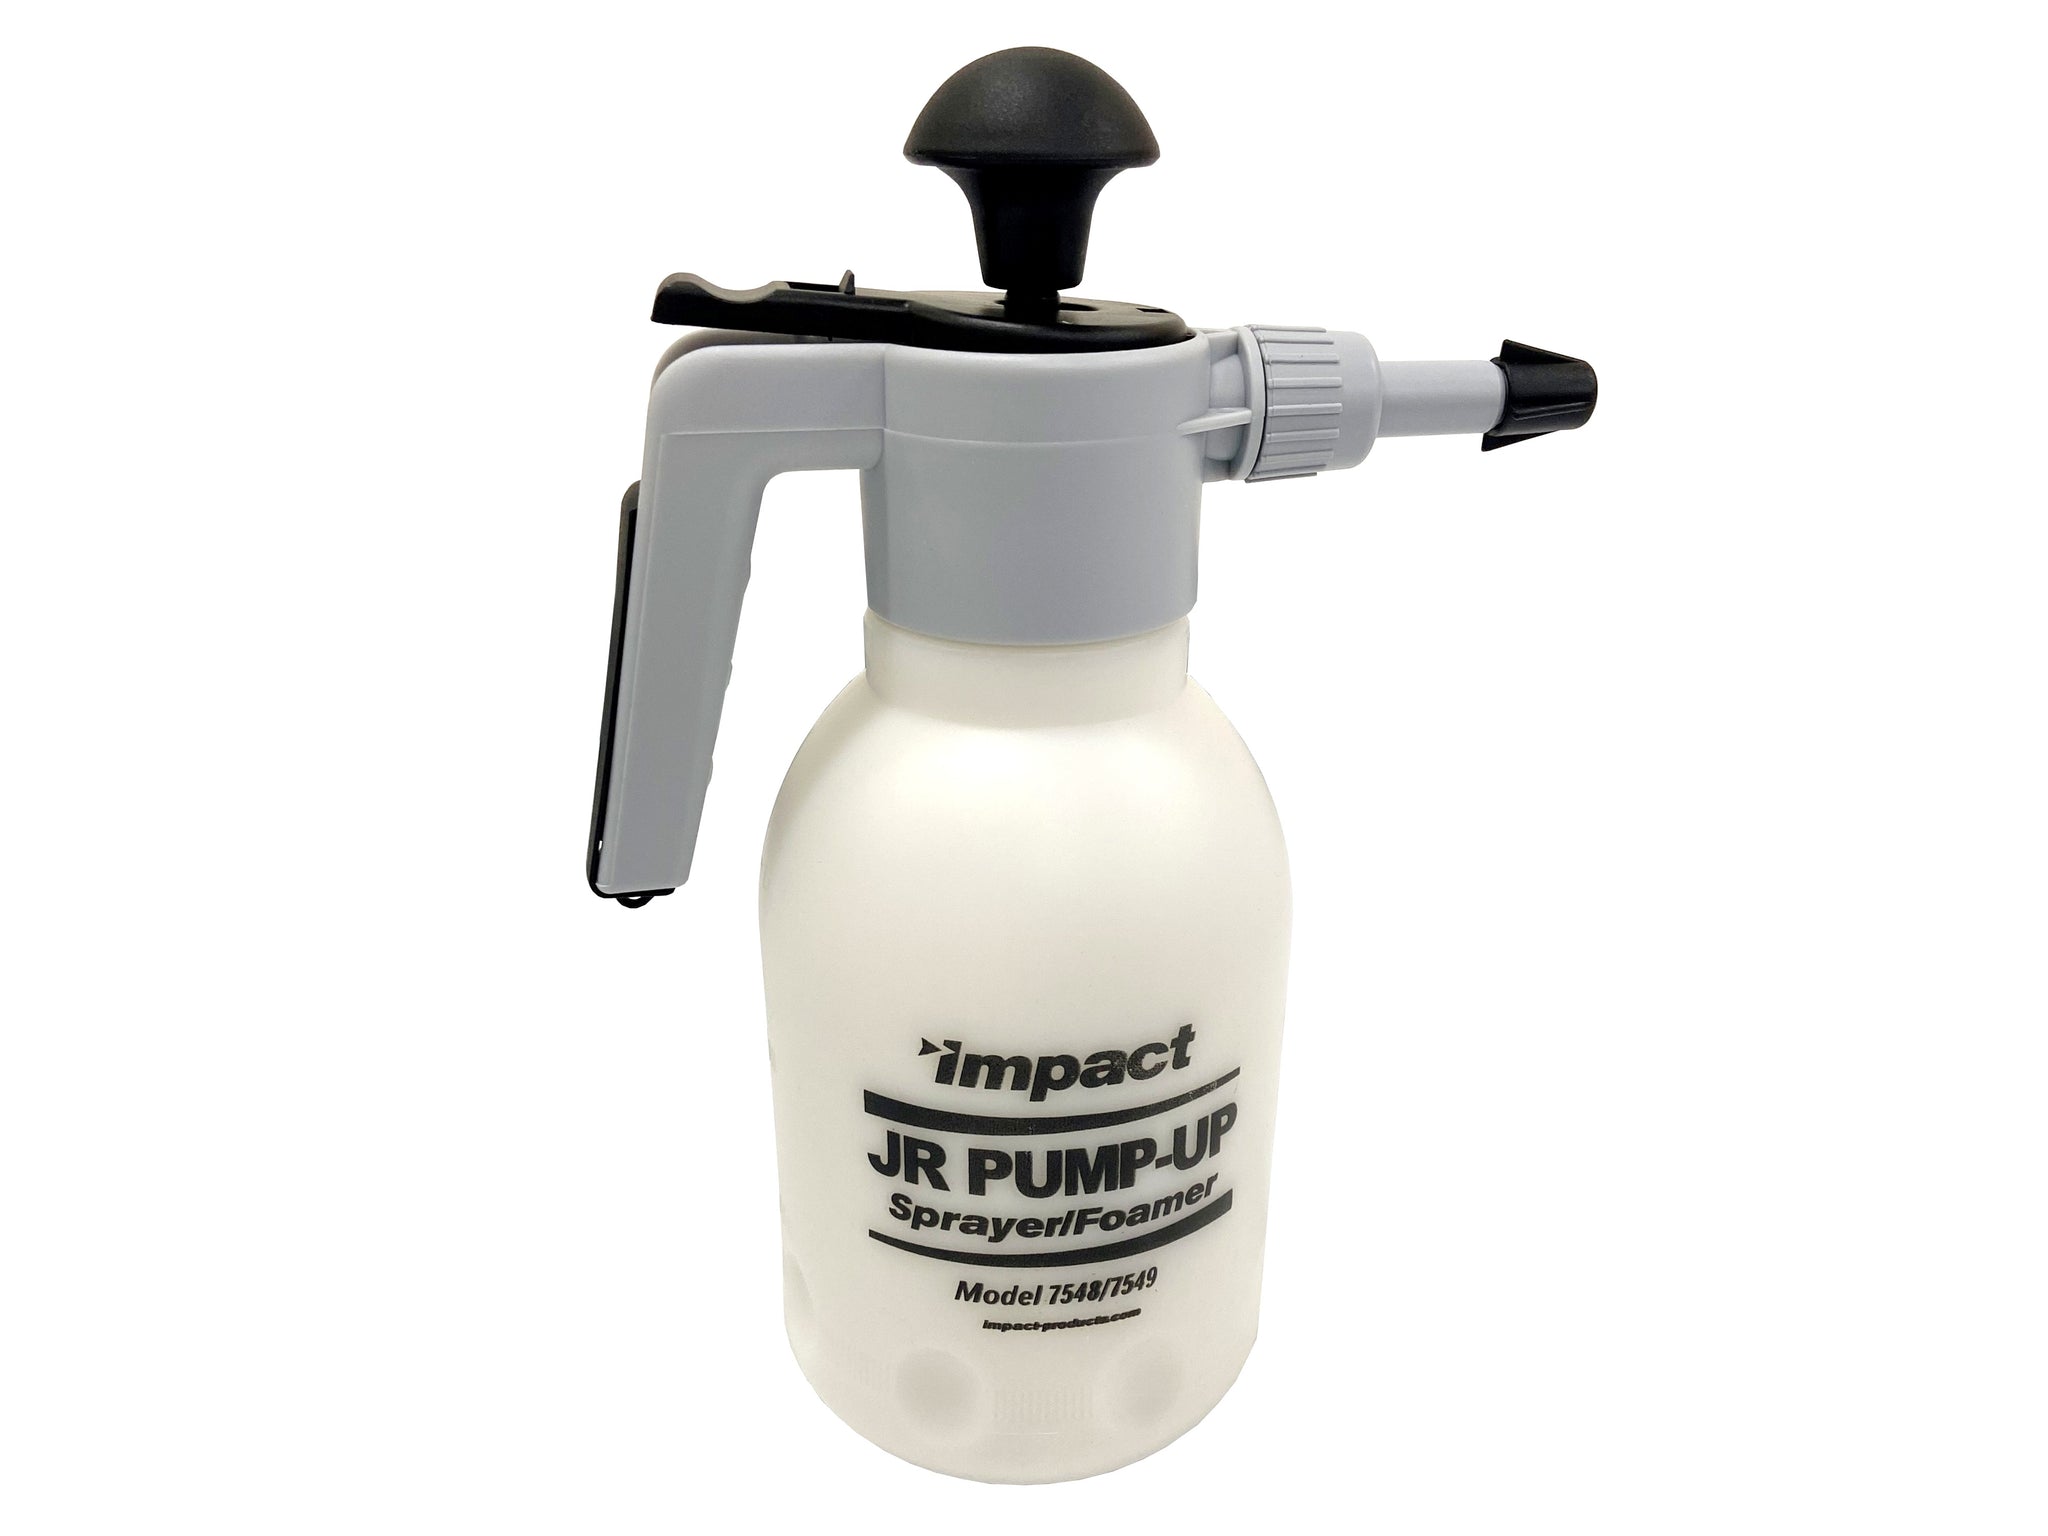 Impact Pump Up Sprayer 48 oz